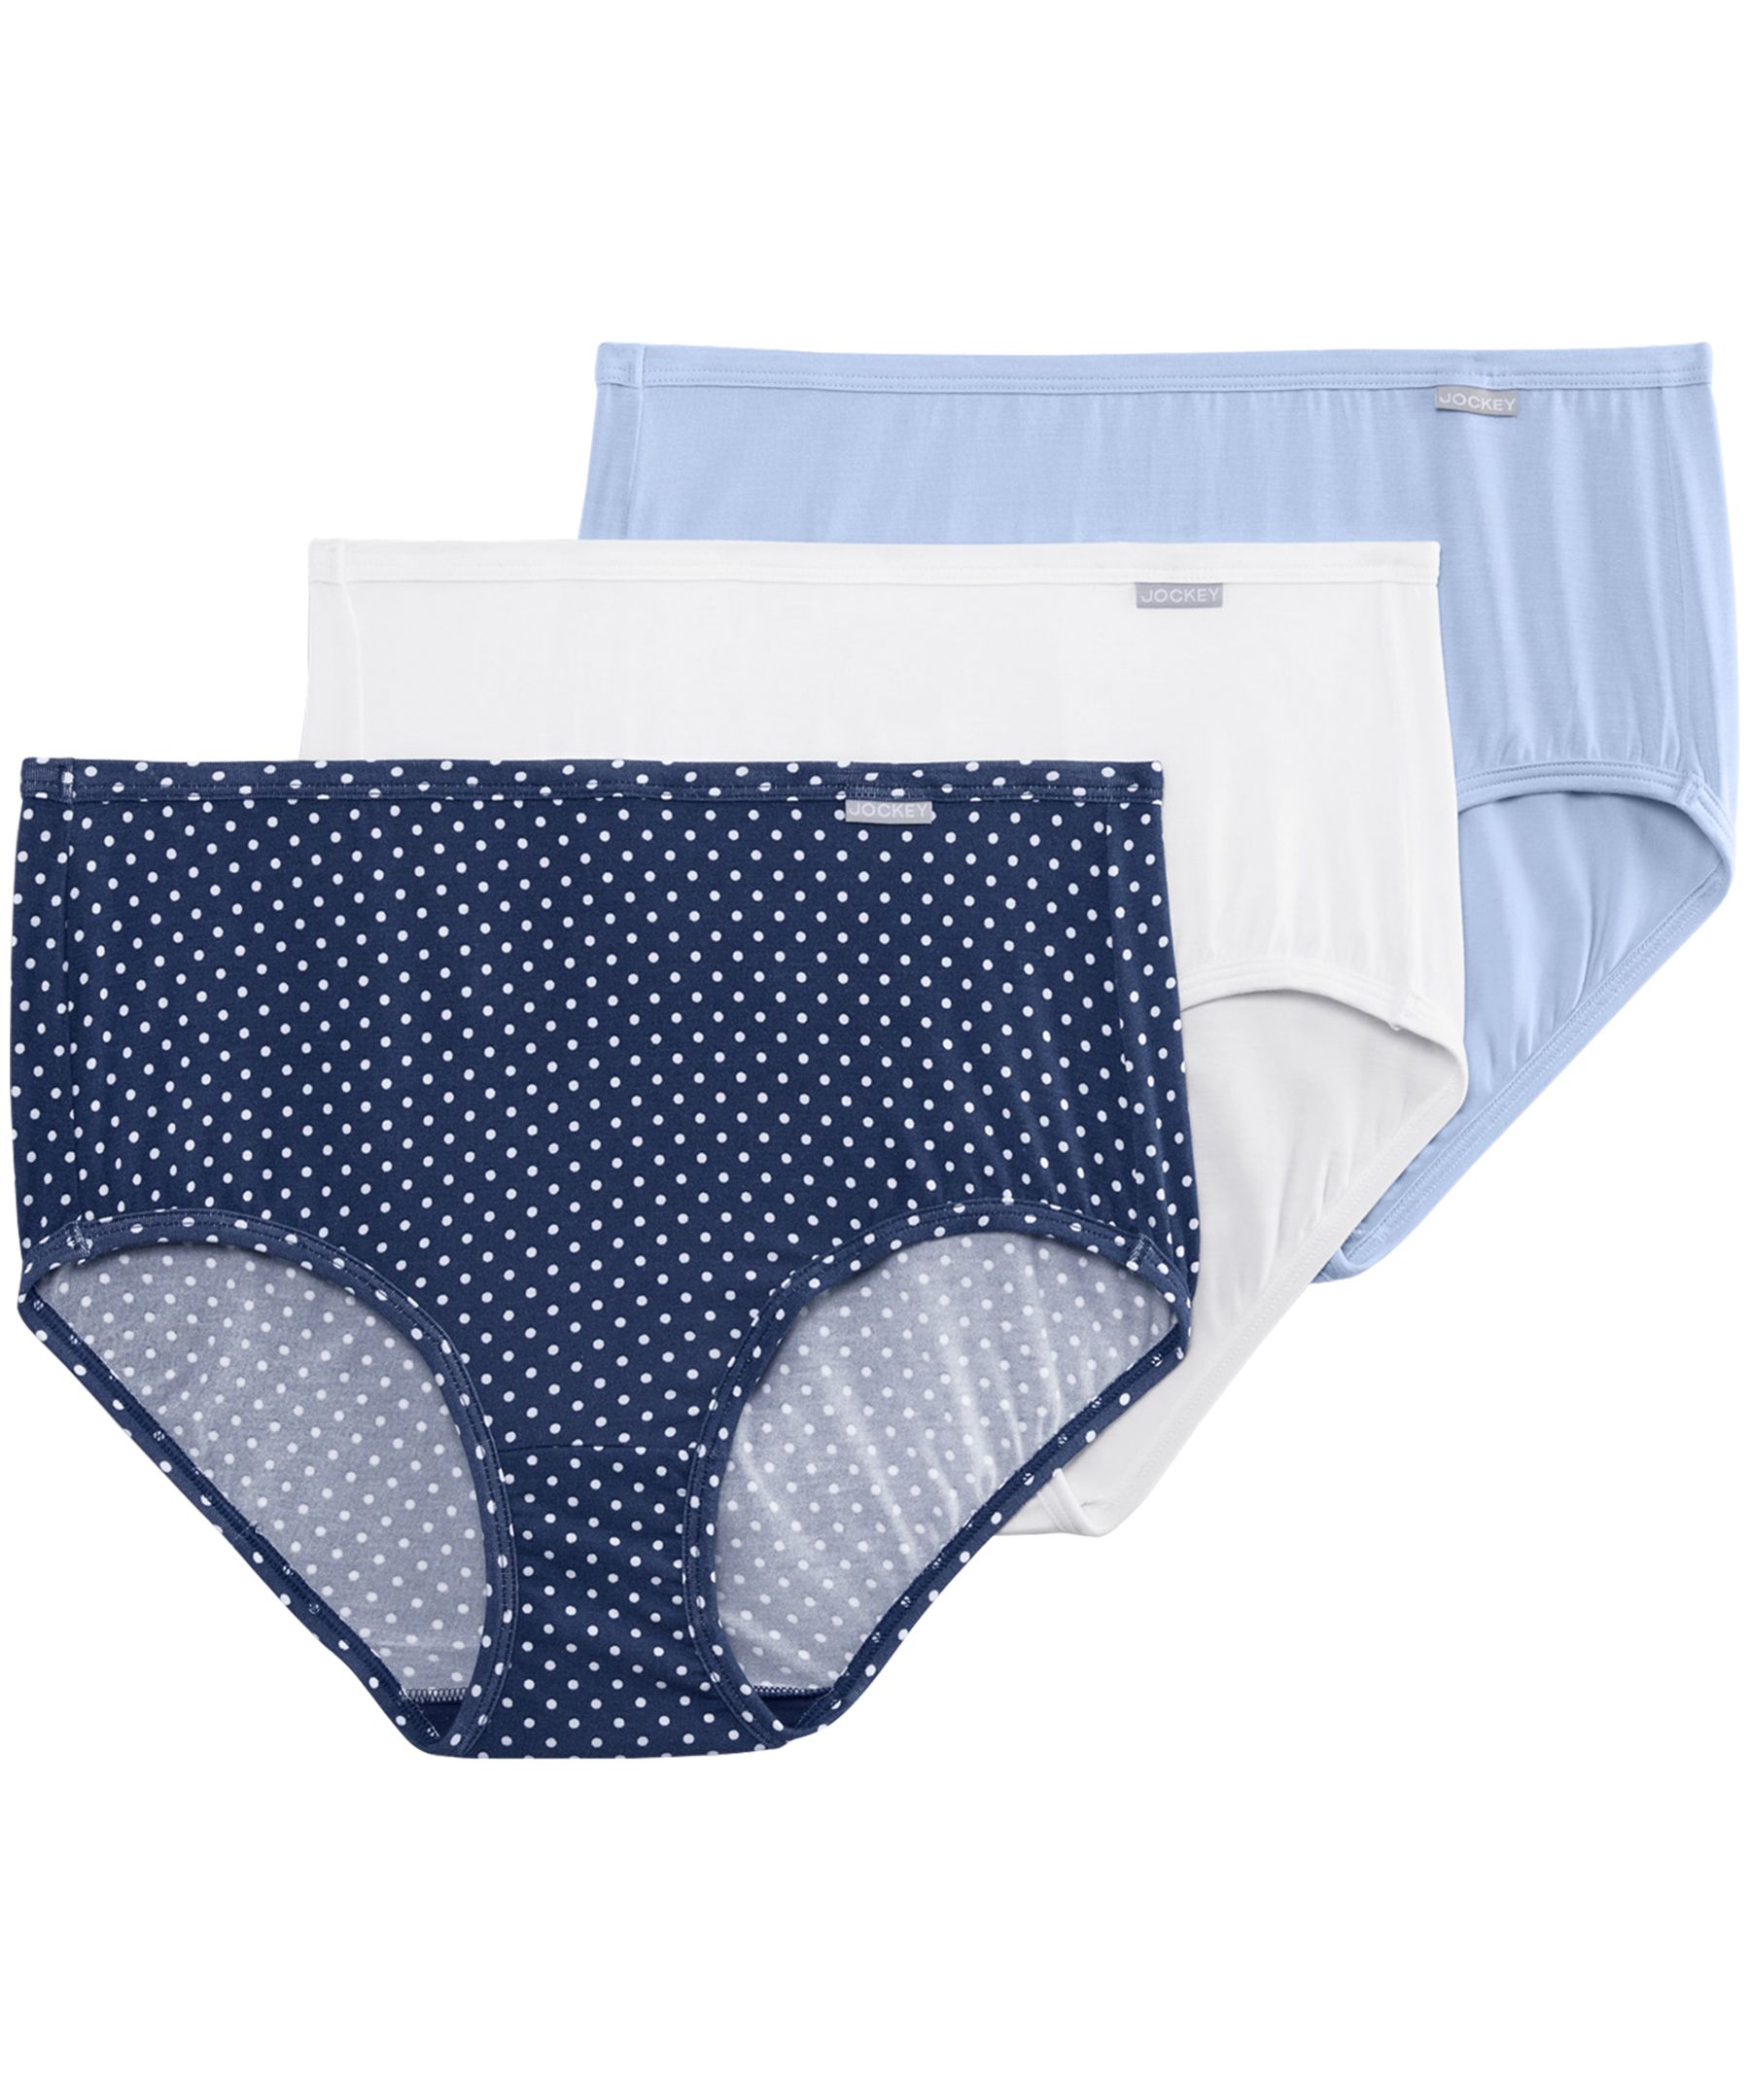 We sell Jockey underwear for women. - Cintra May's Lingerie